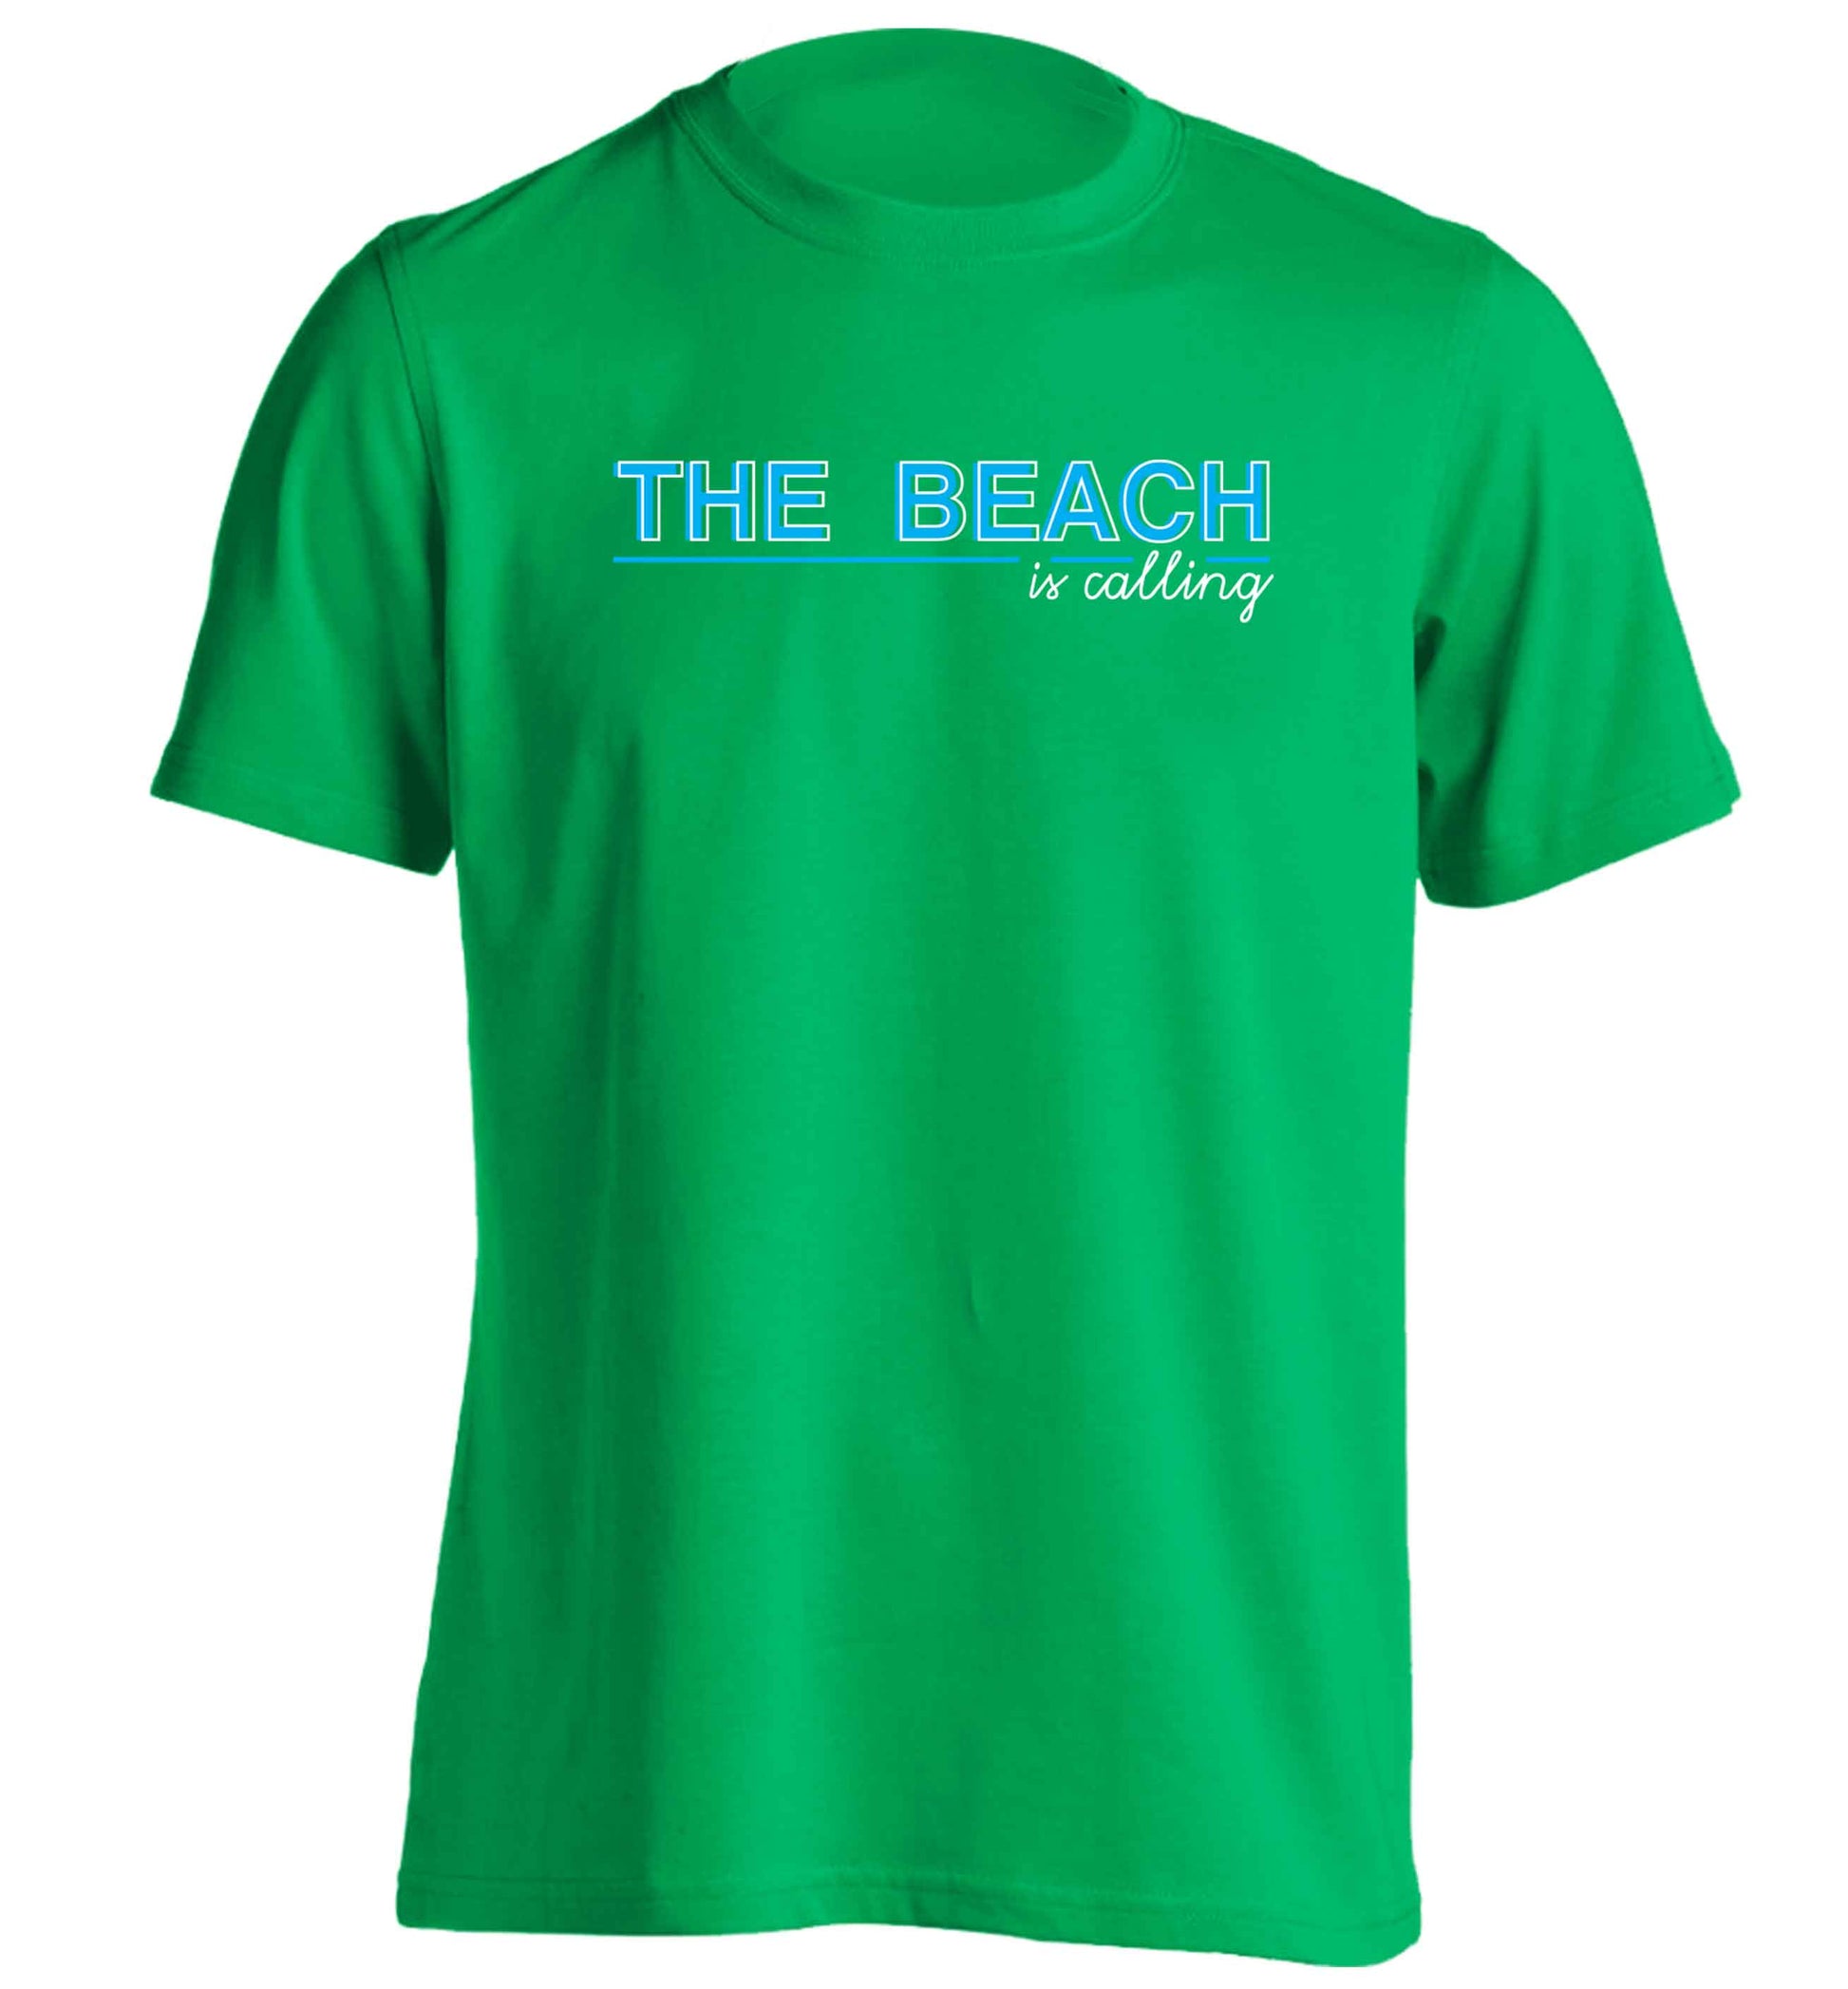 The beach is calling adults unisex green Tshirt 2XL